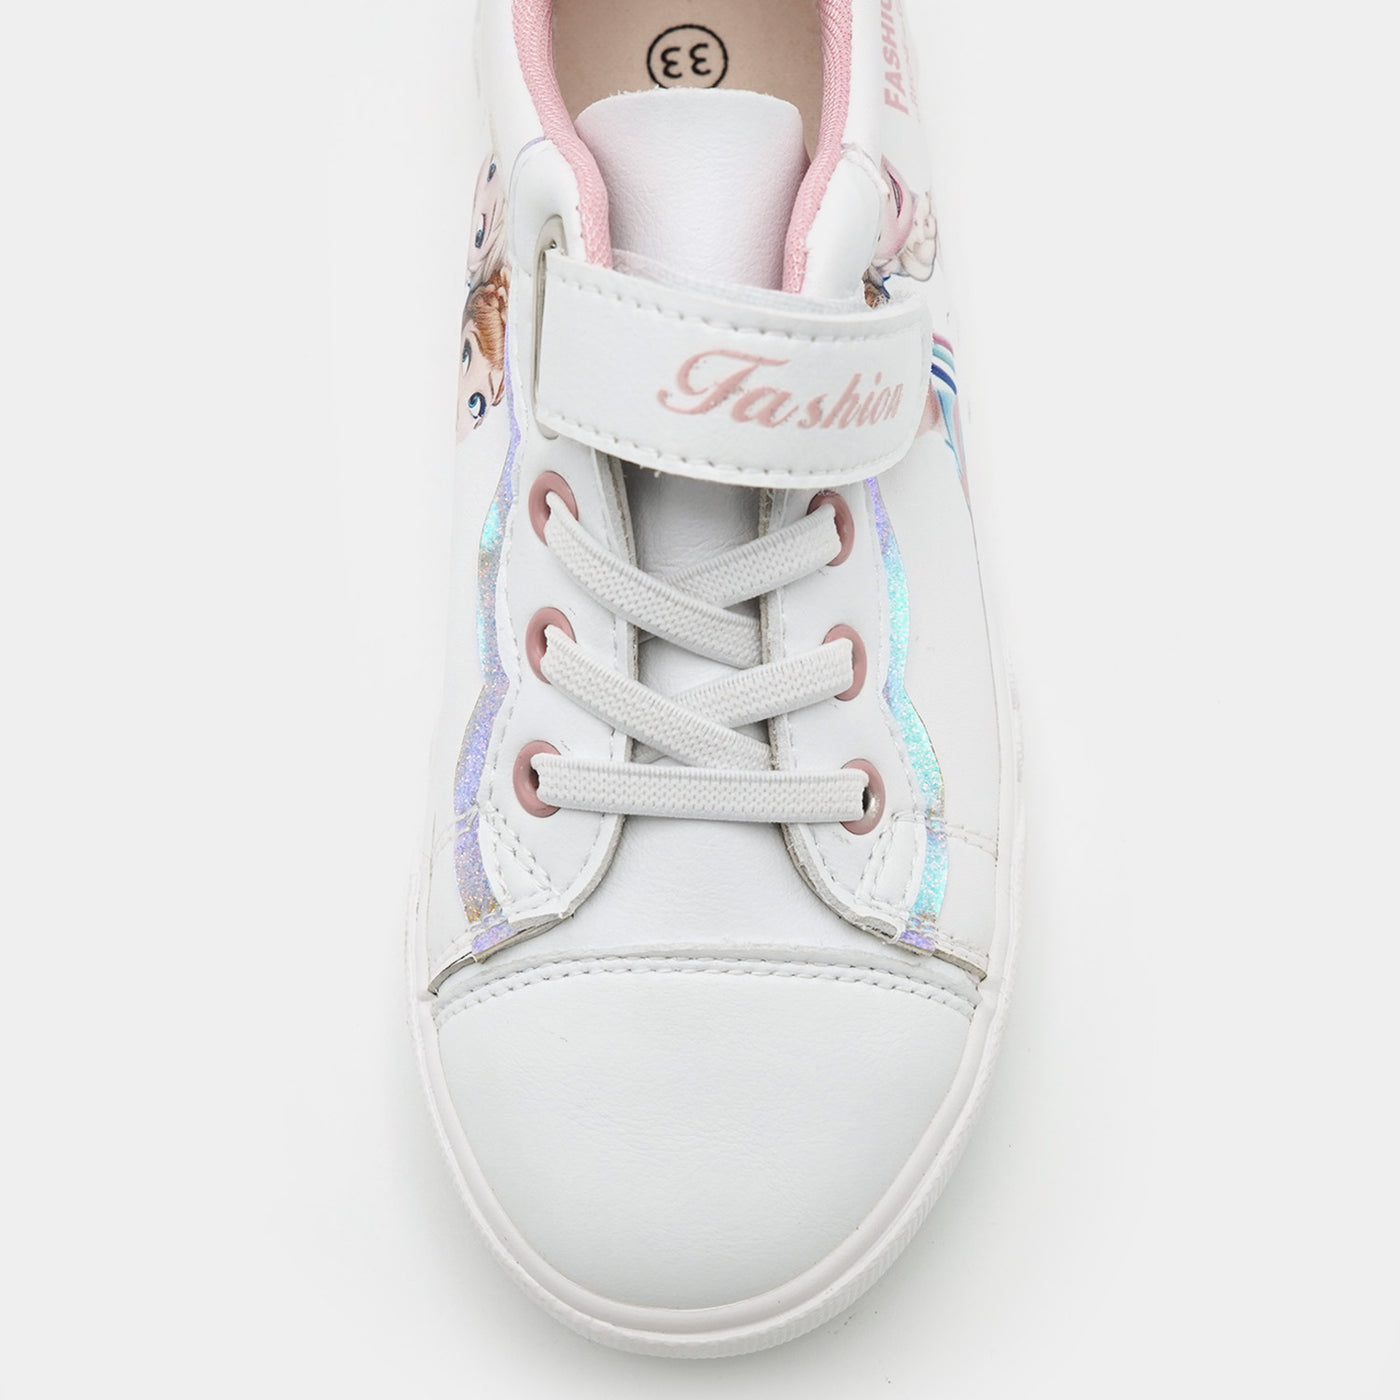 Girls Sneaker 5806A-Pink/White